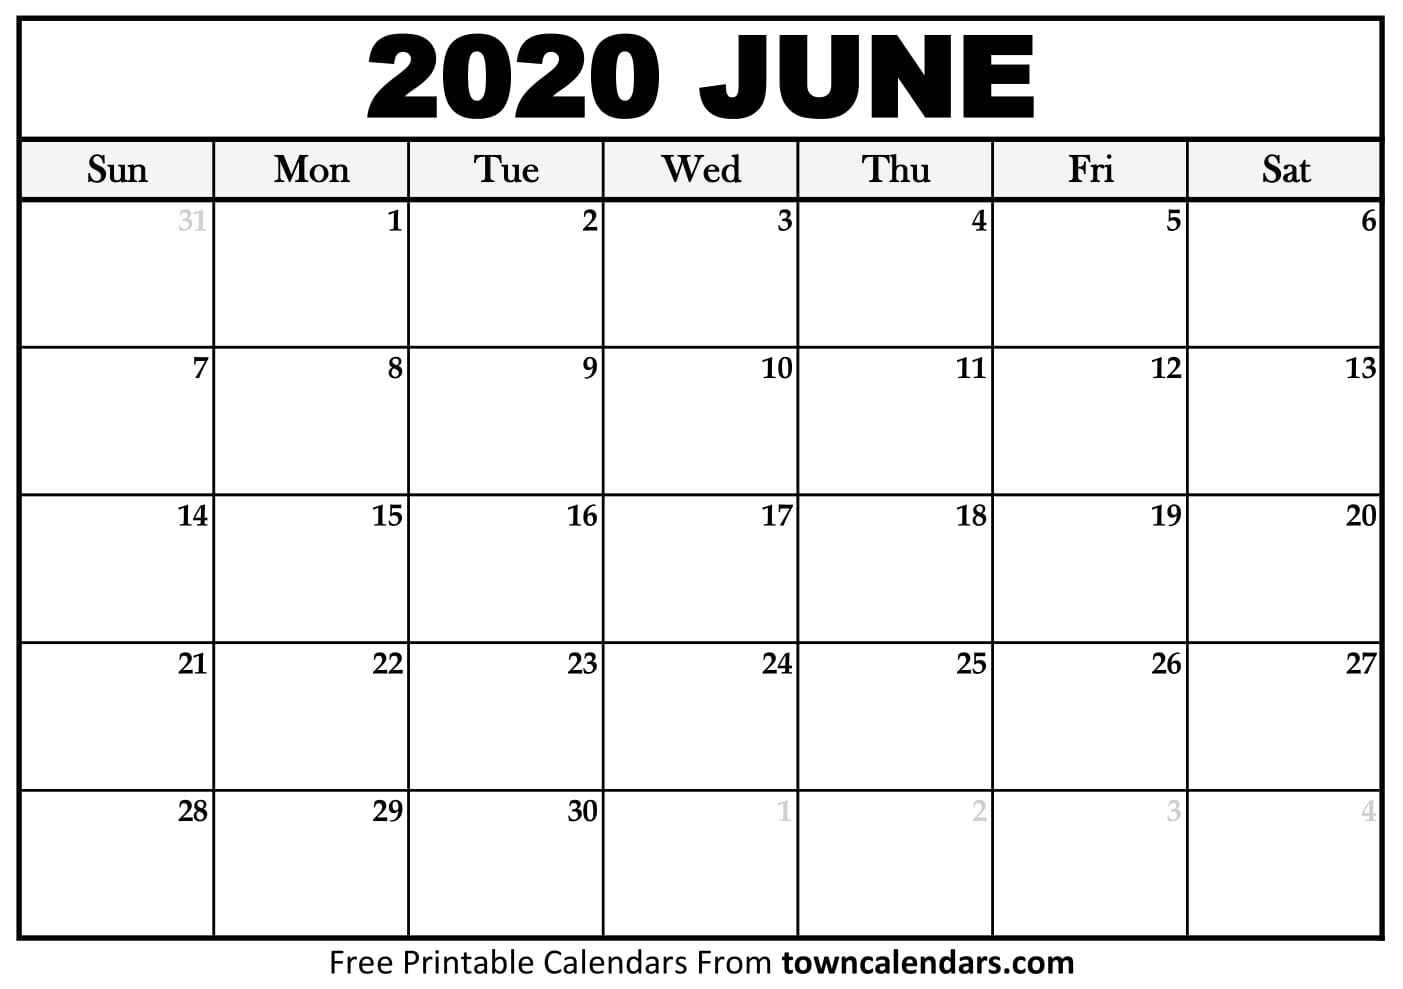 Printable June 2020 Calendar - Towncalendars